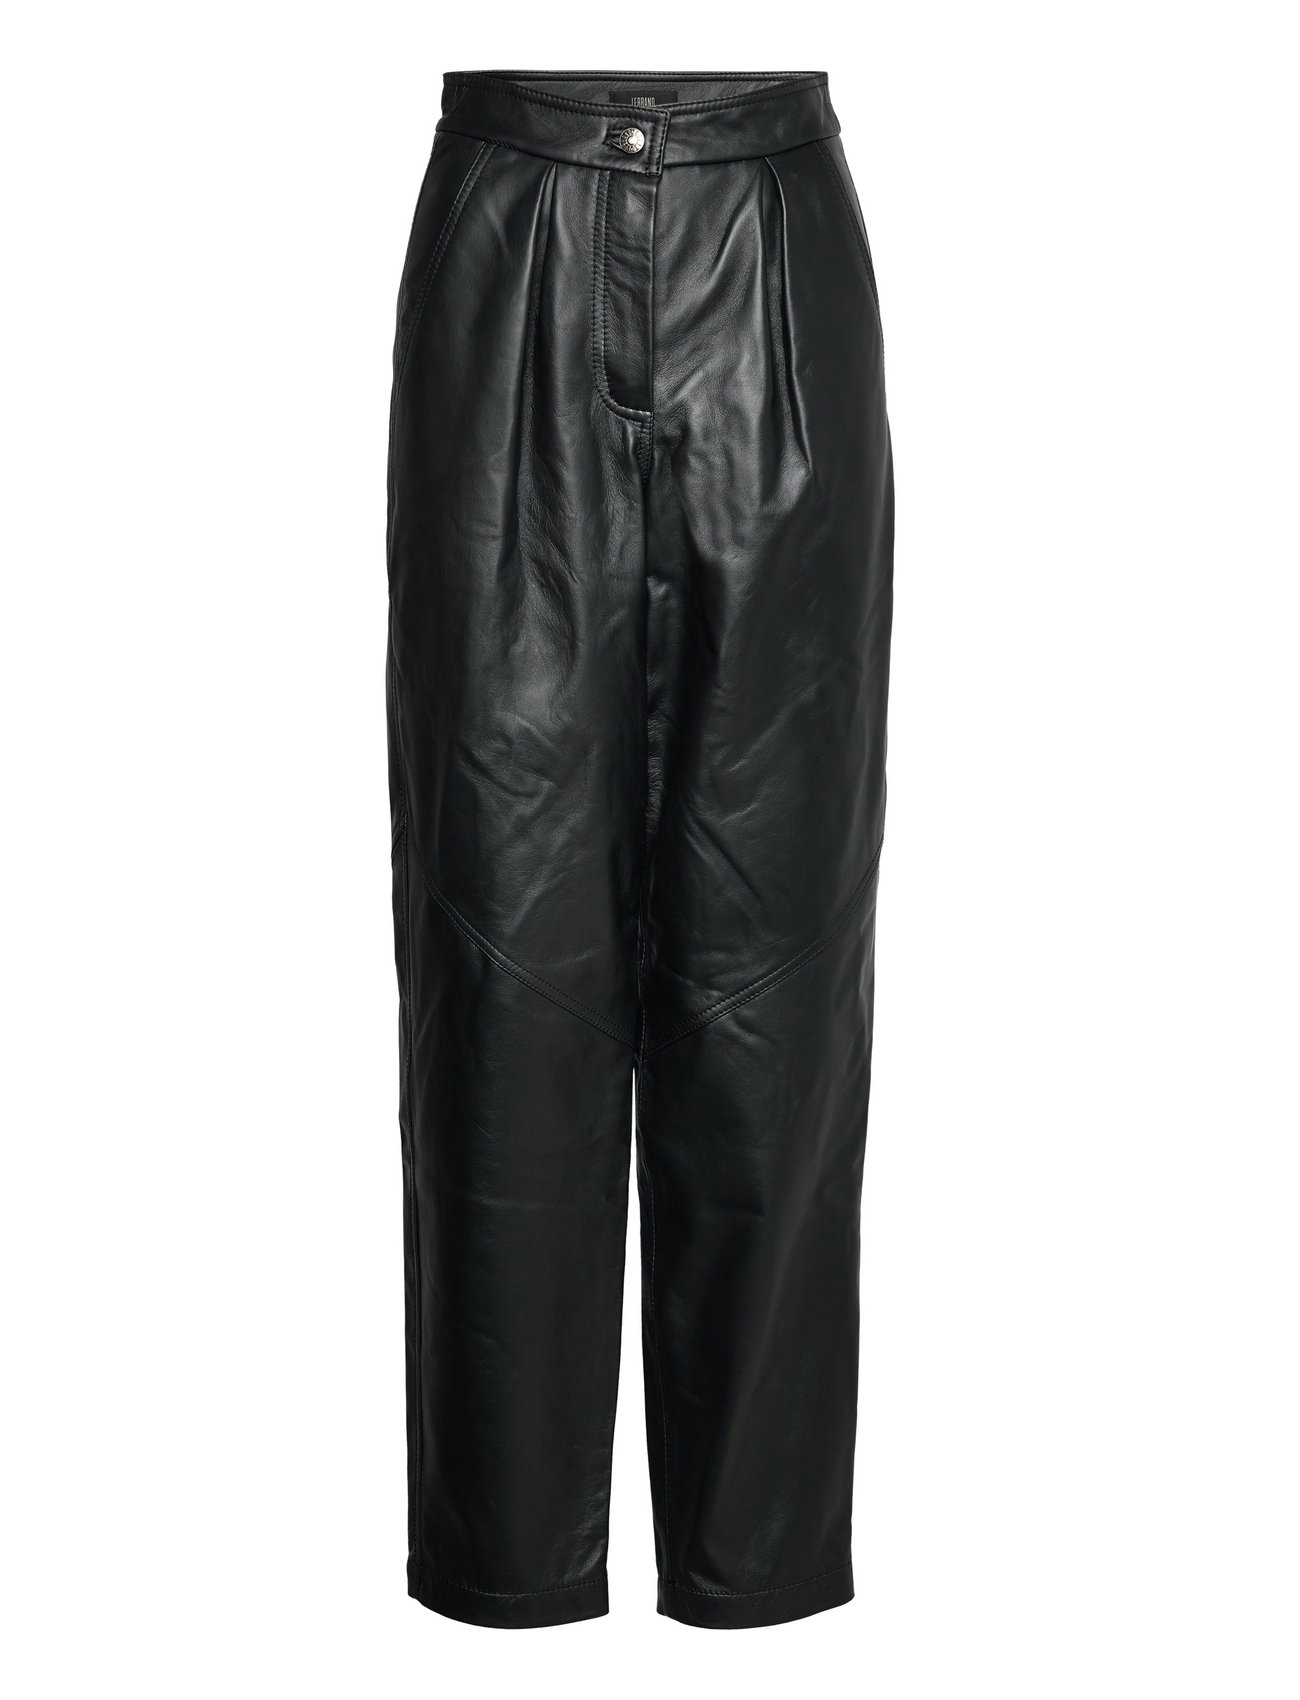 Leather trousers Alexandre Vauthier  Leather pants  223LPA1100BLACK